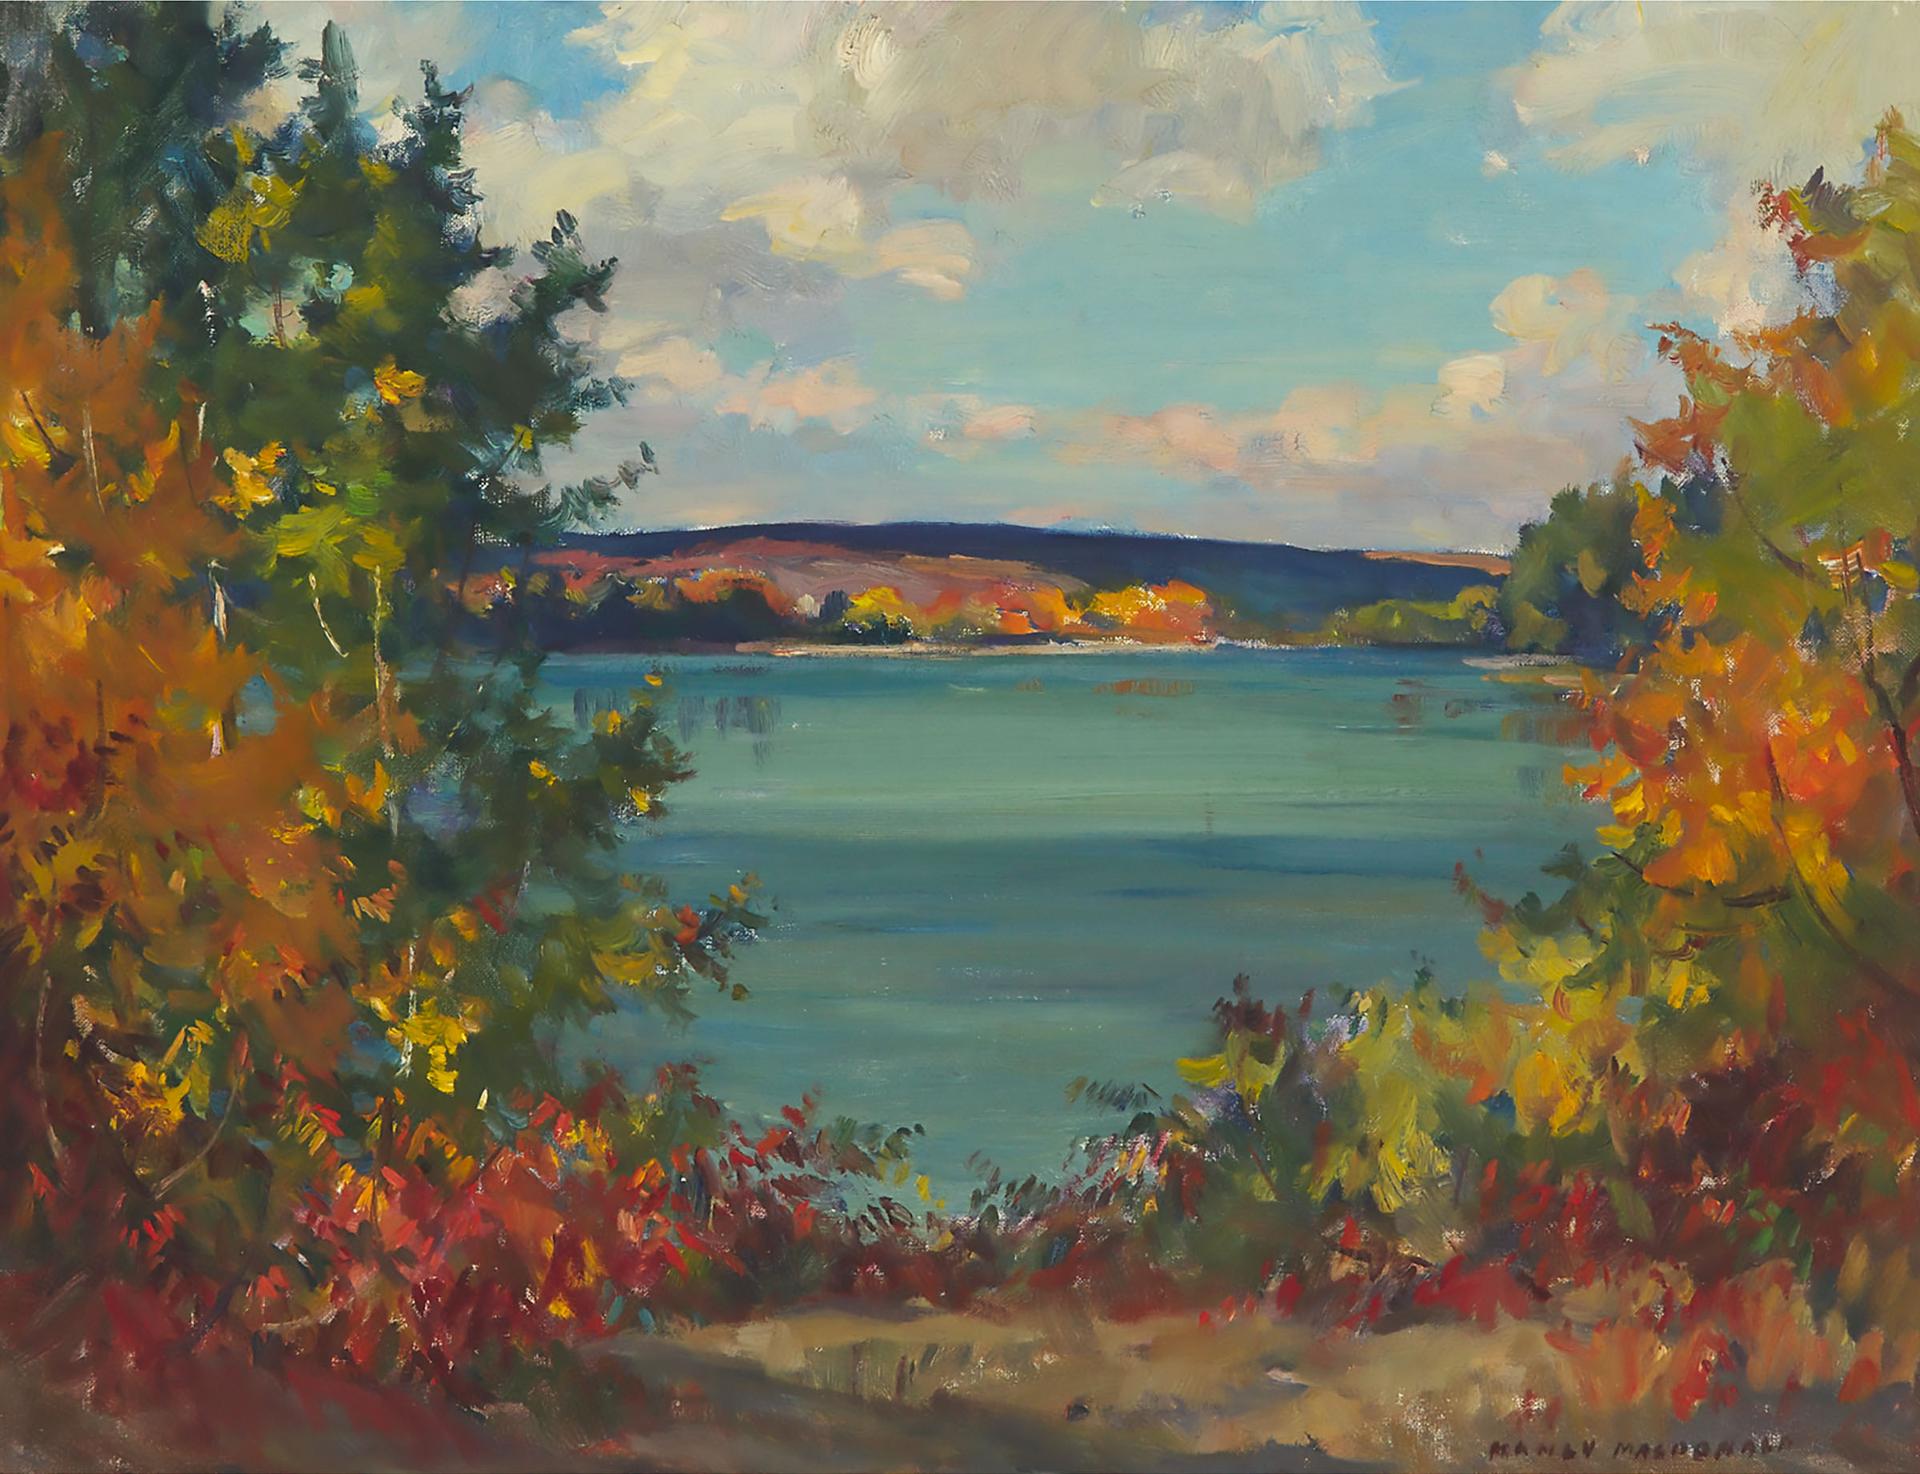 Manly Edward MacDonald (1889-1971) - Autumn, Bay Of Quinte